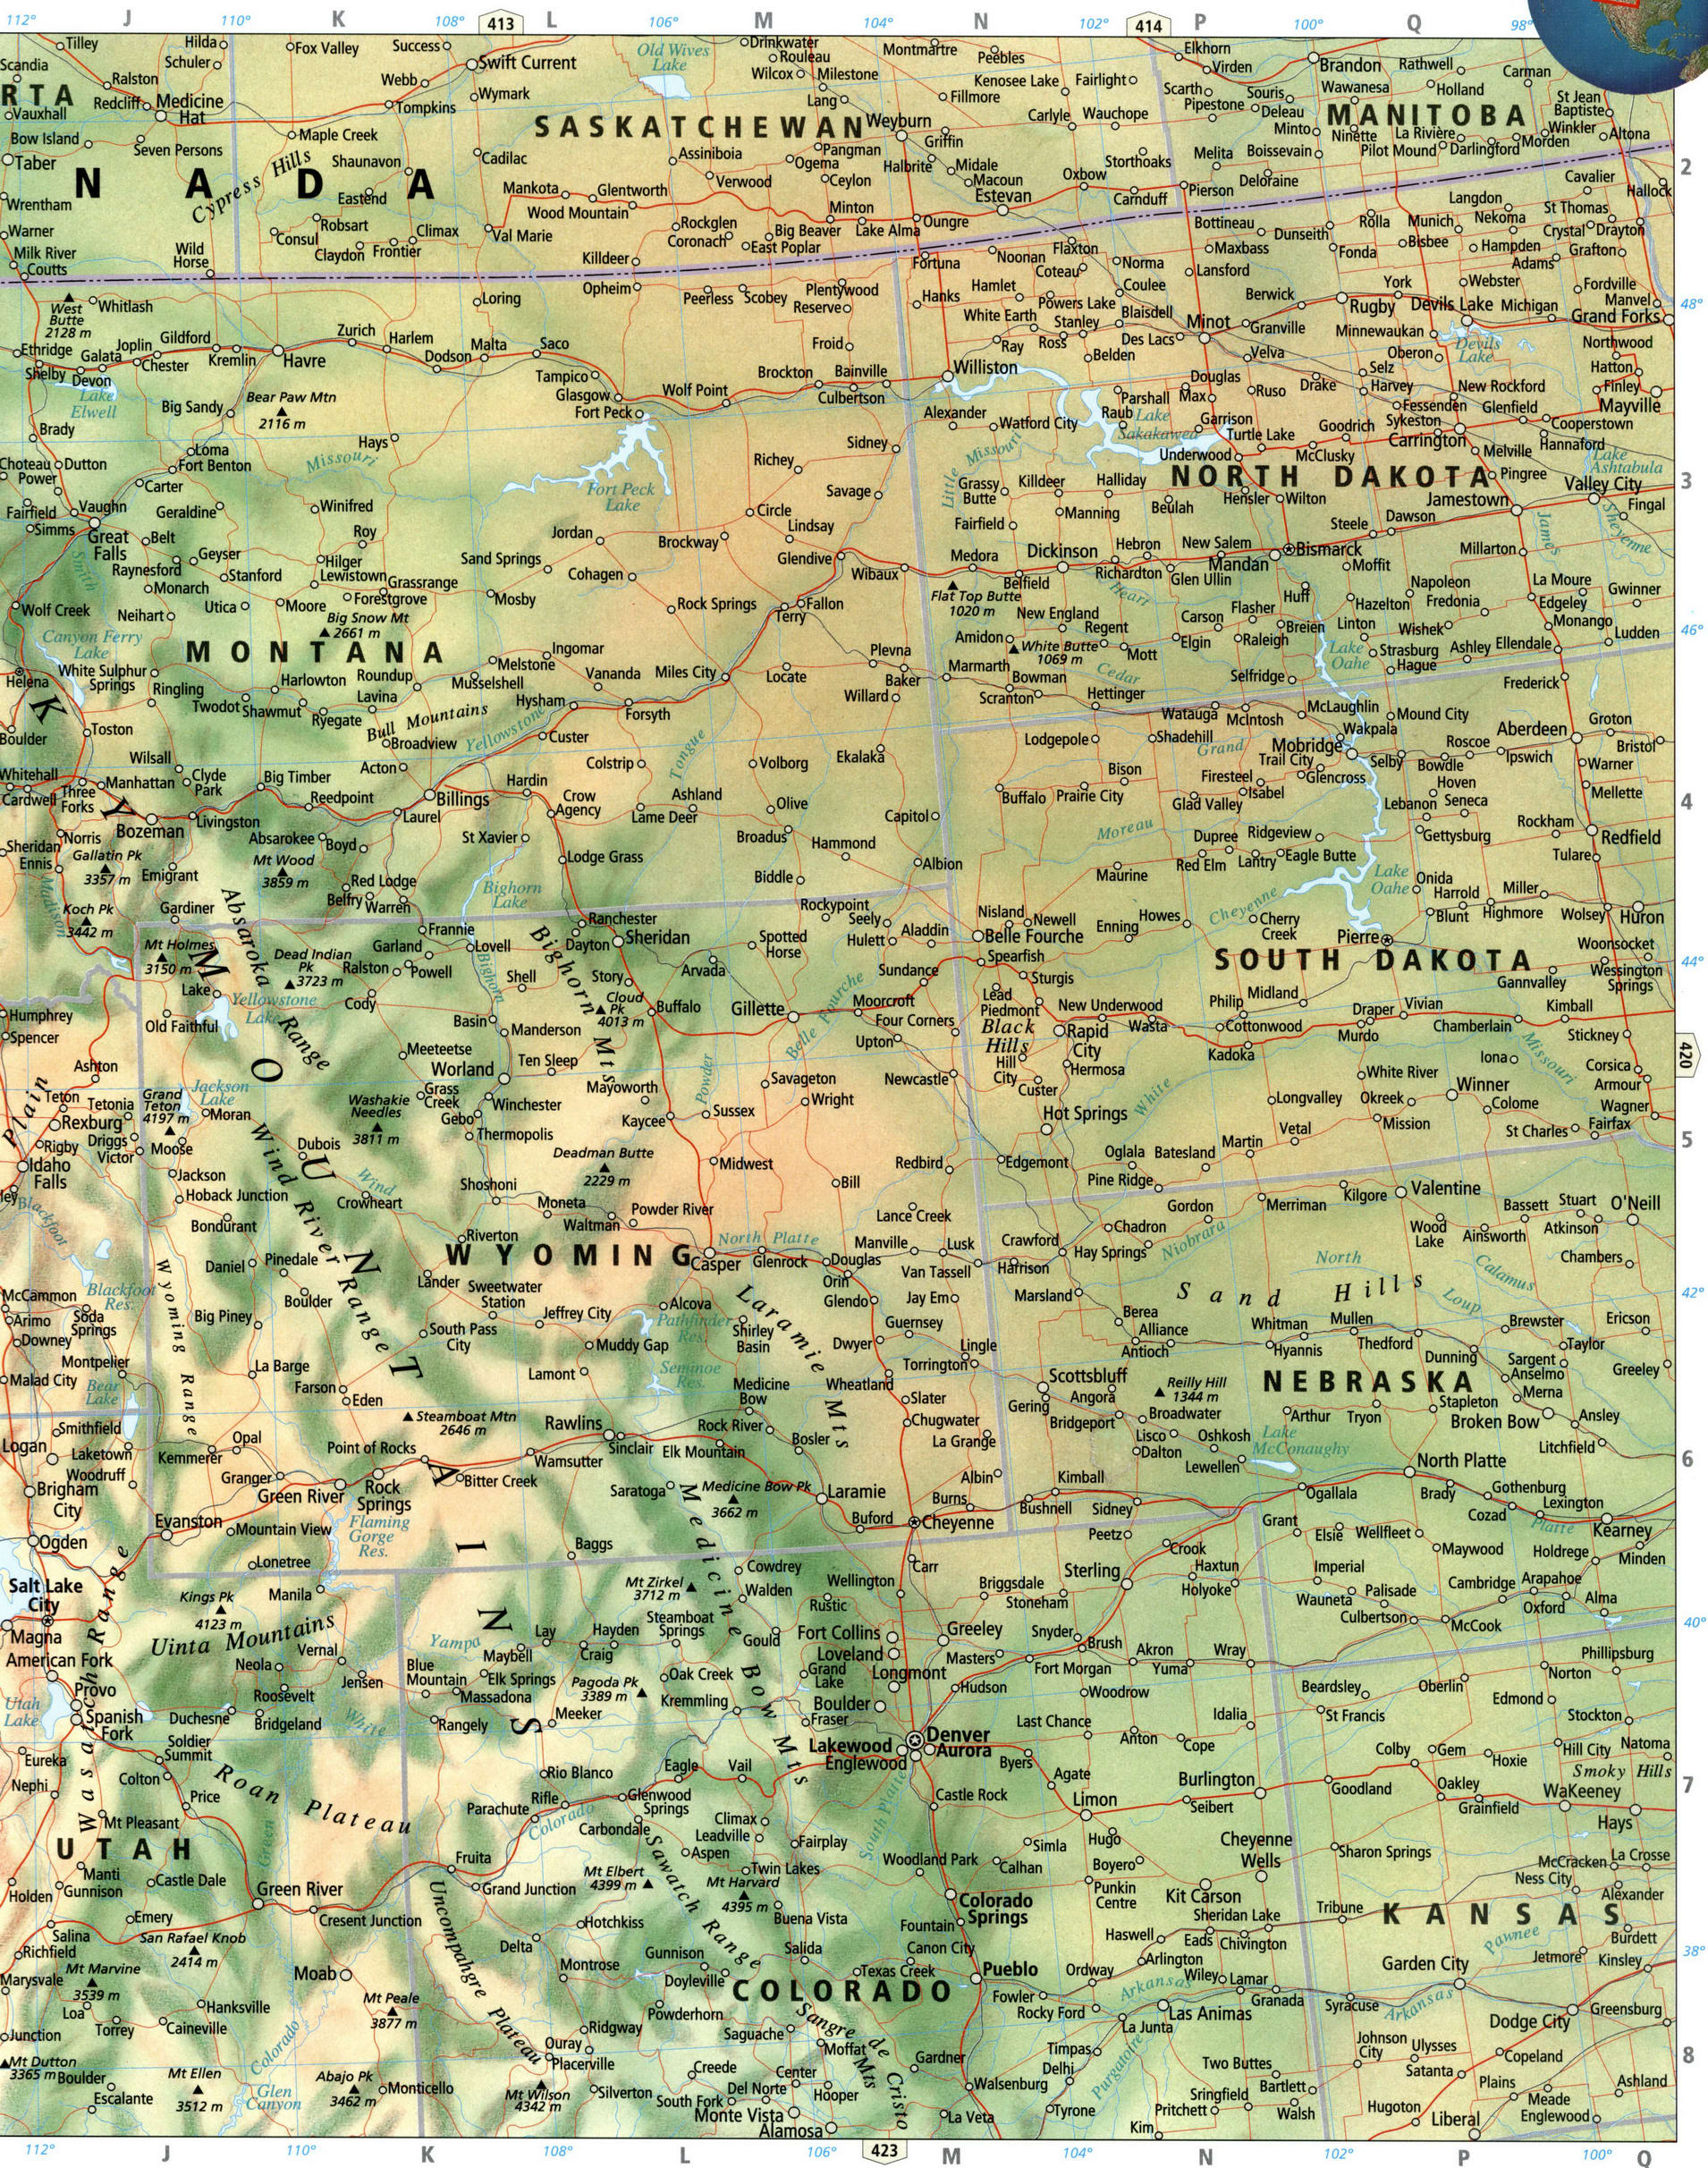 Montana and Wyoming map